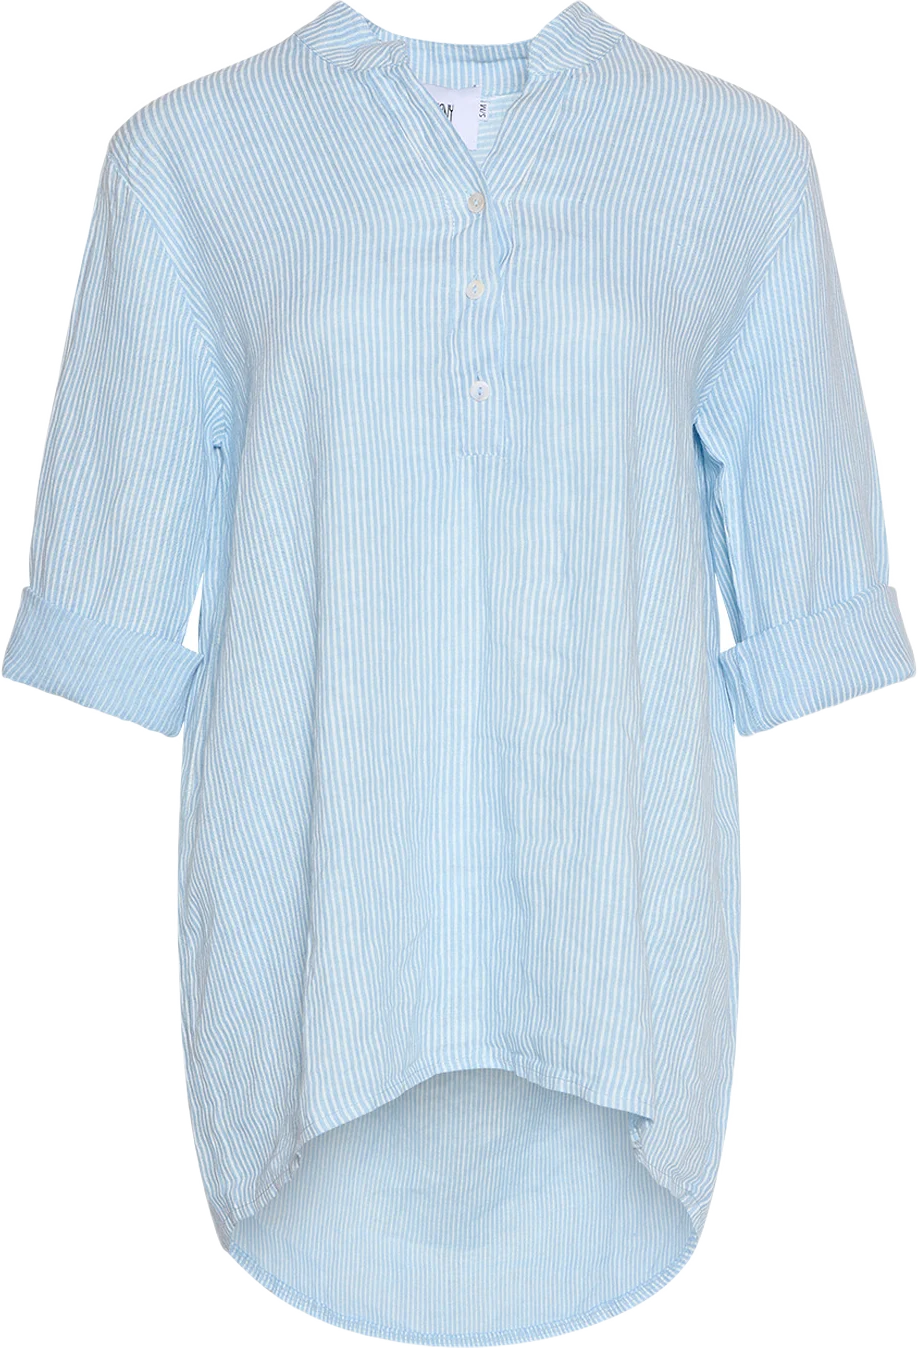 17661, Shirt Stripe, Linen - Light Blue Stripe